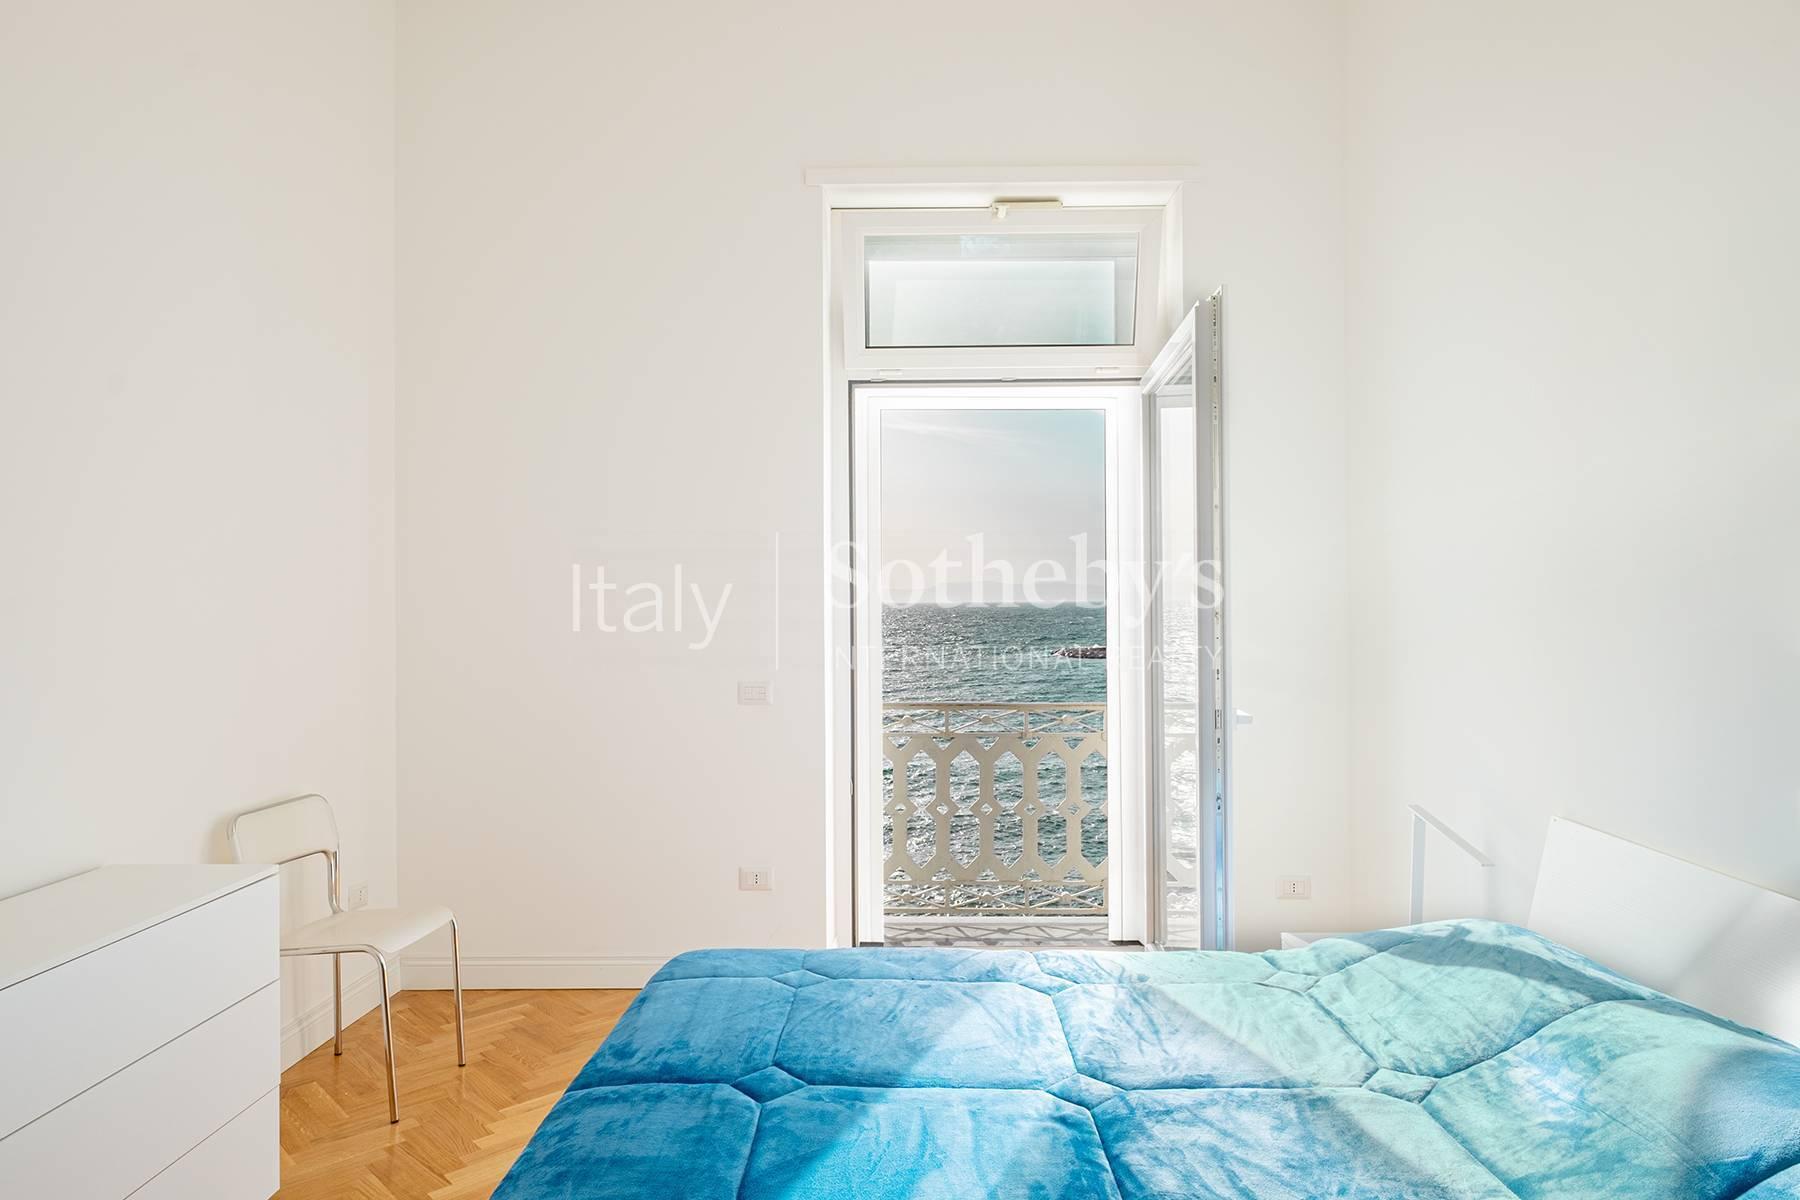 Panorama-Wohnung auf der Via Caracciolo - 8